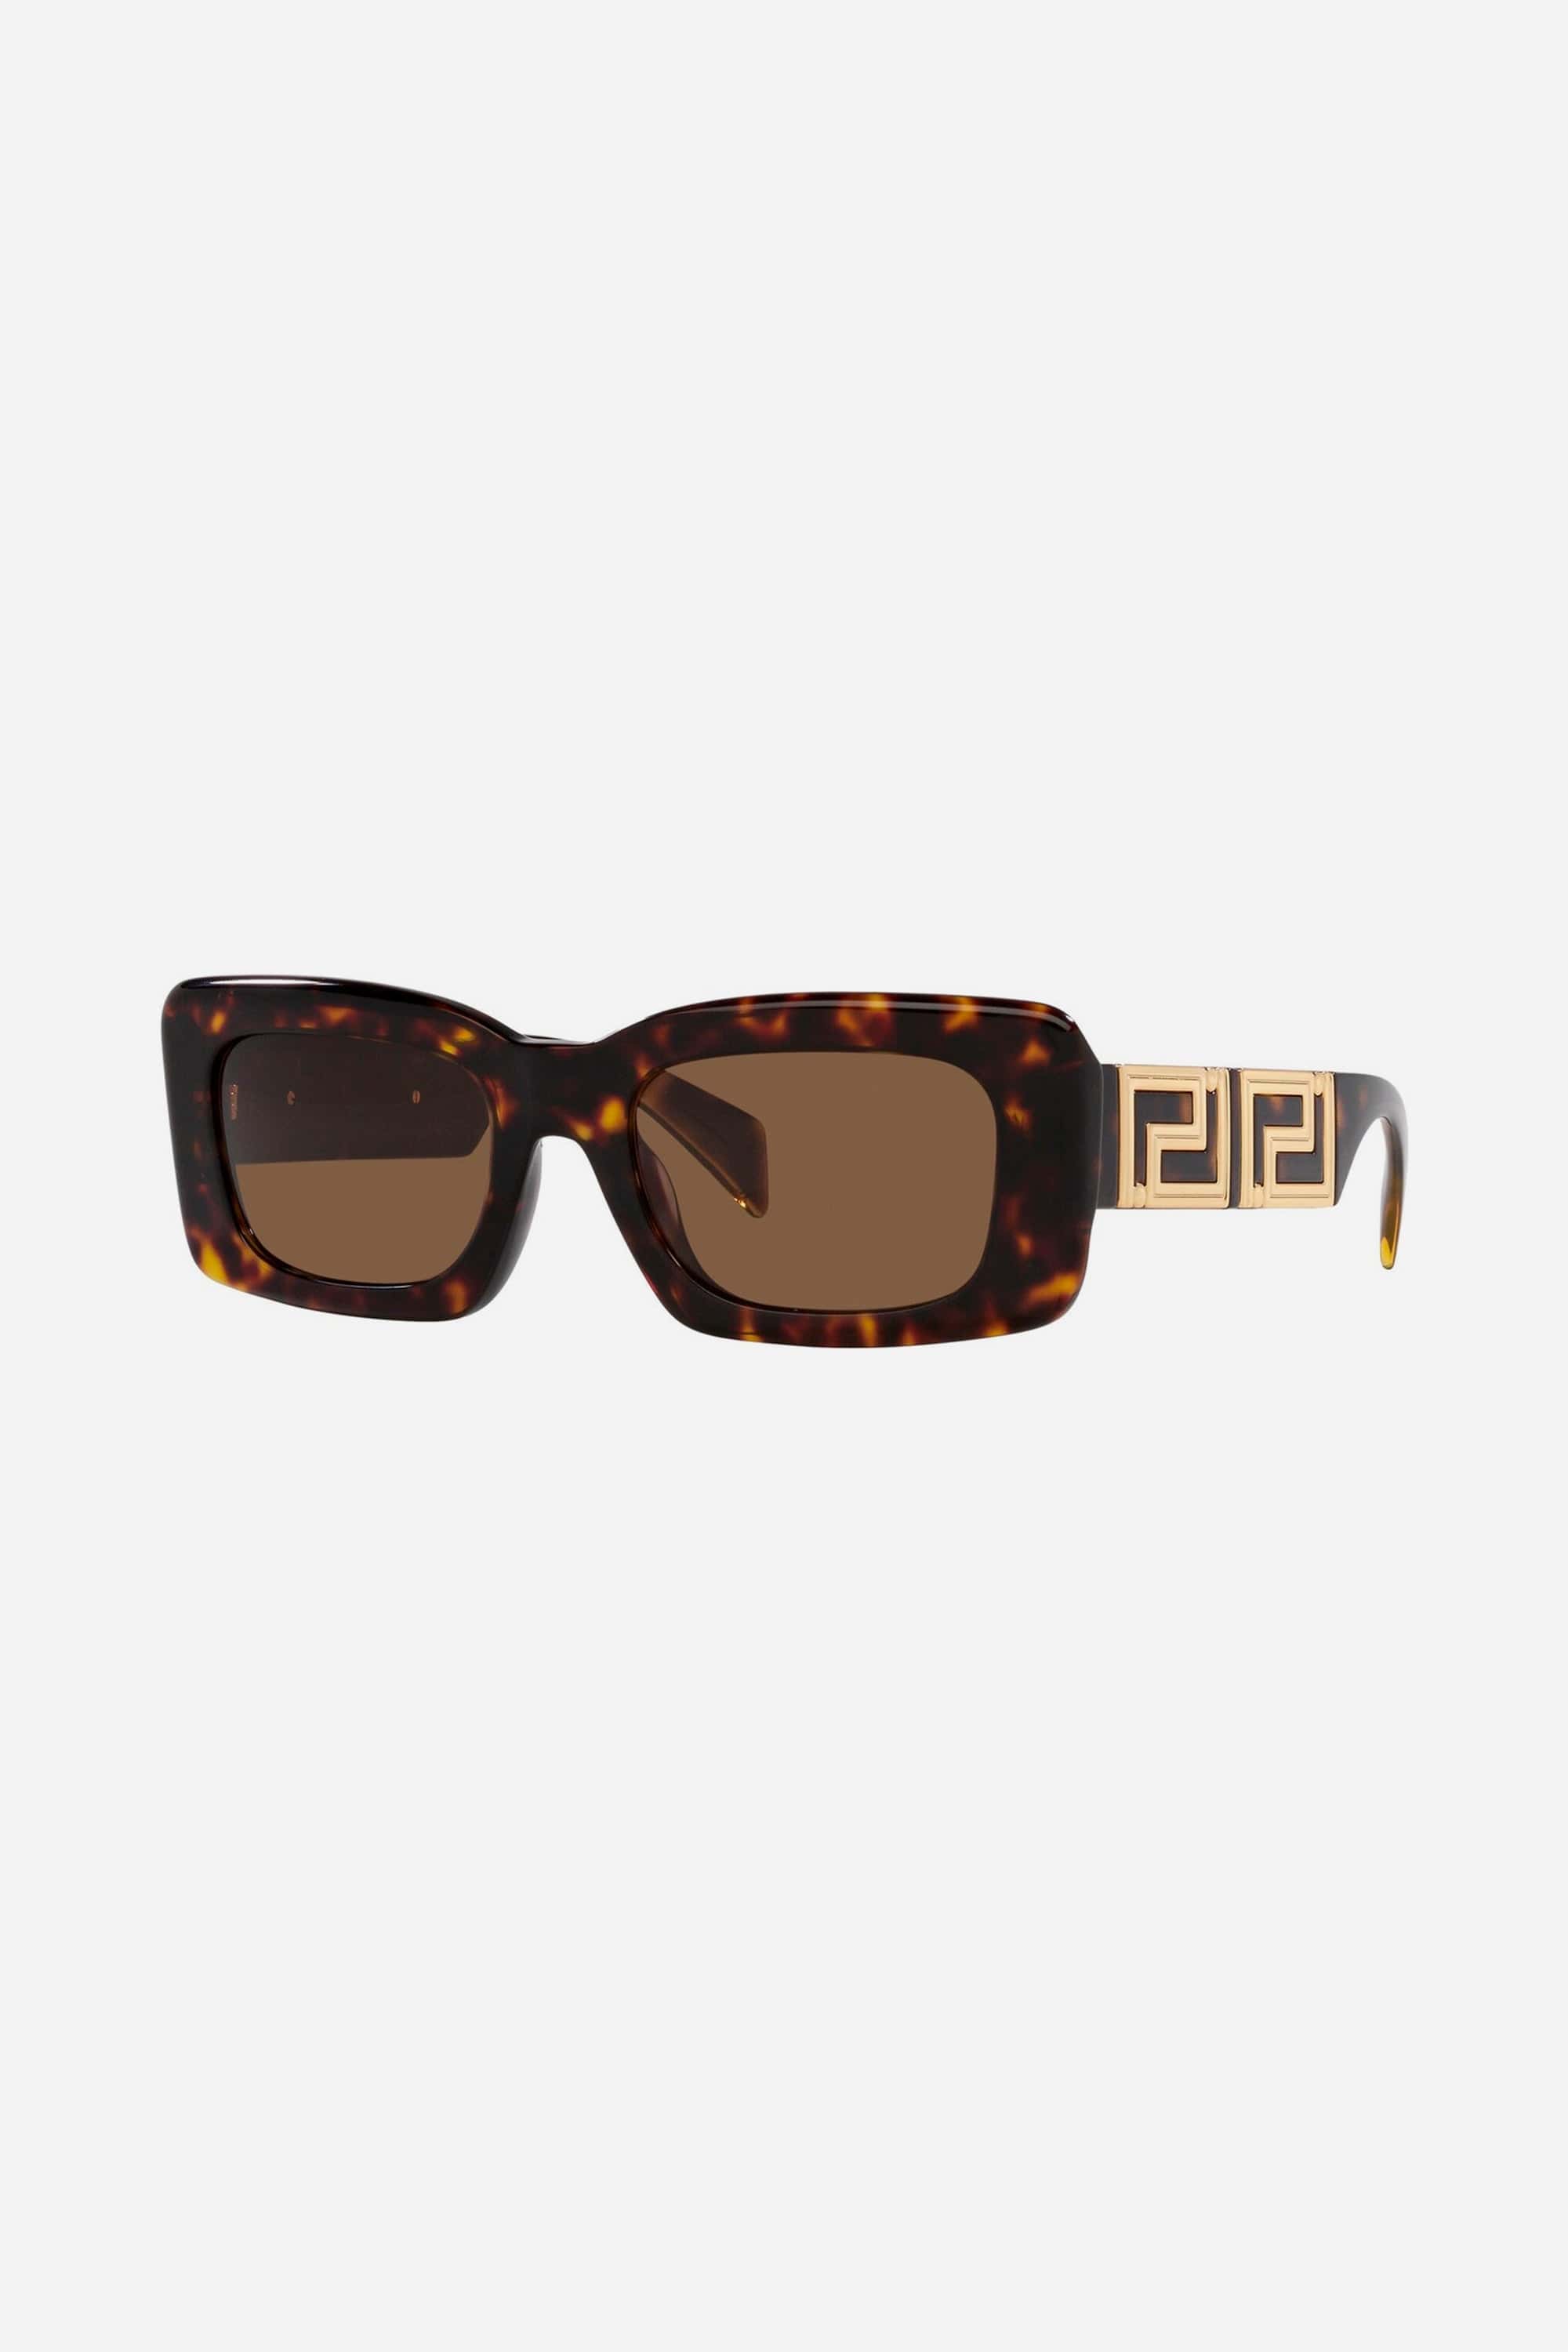 Versace squared havana sunglasses - Eyewear Club